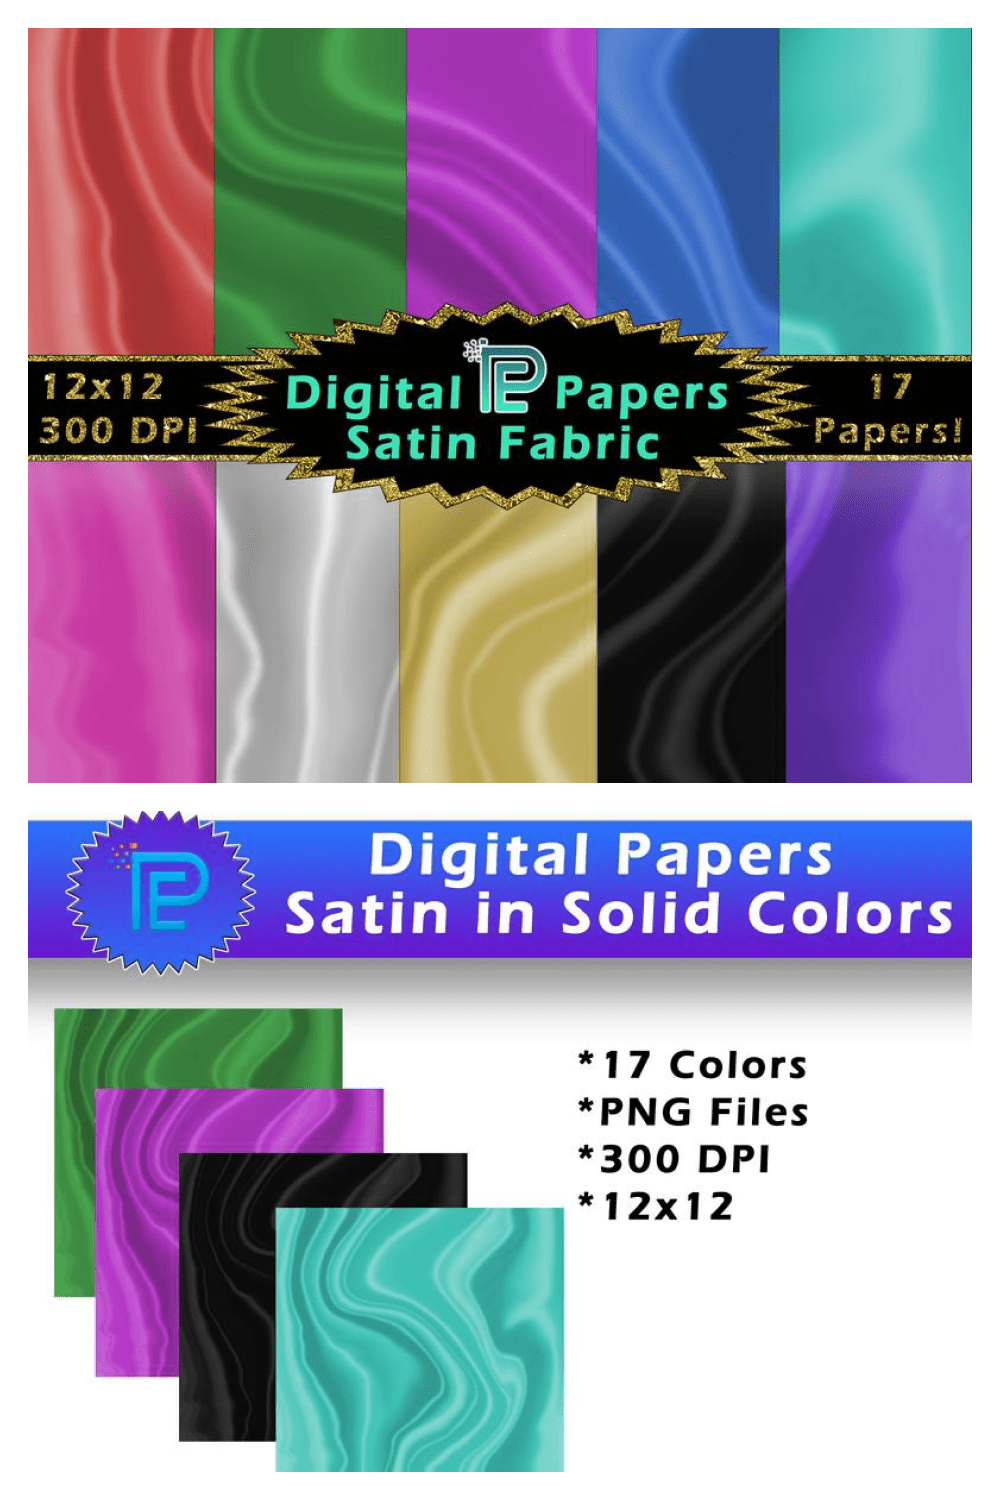 Delicate Satin Fabric Texture.